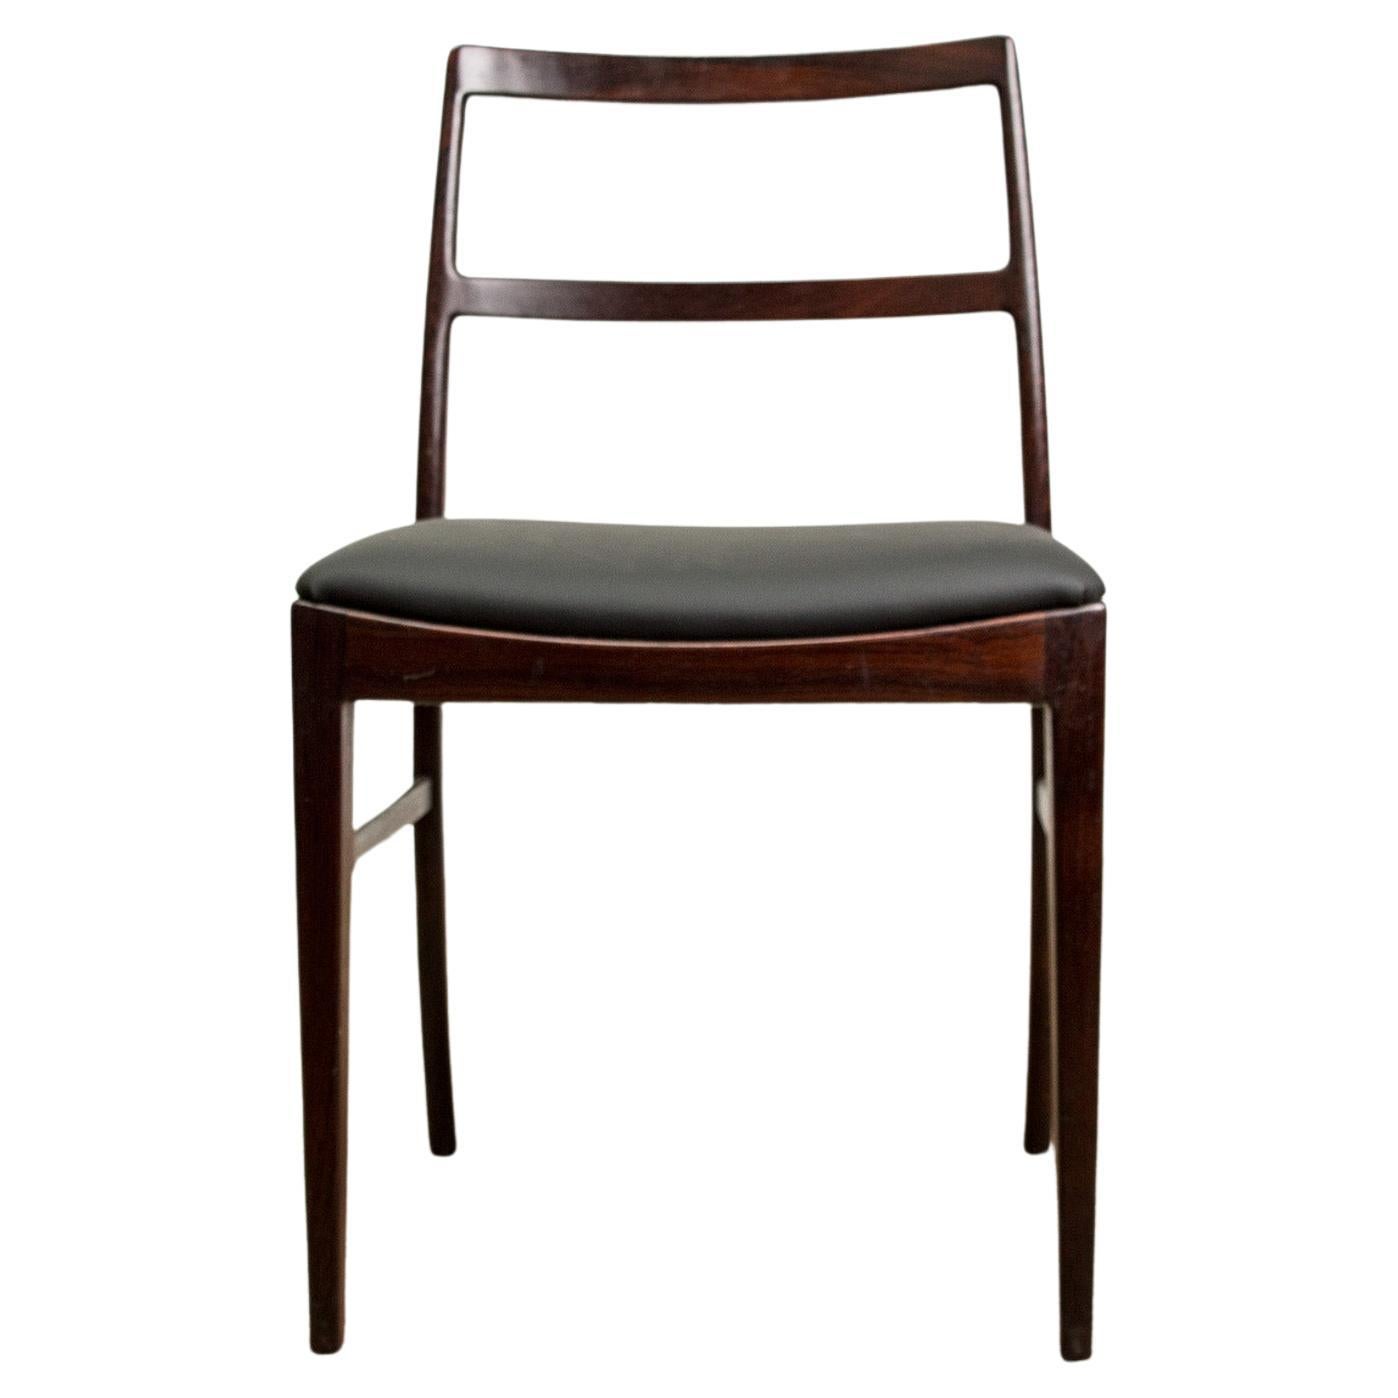 Set of 4 Danish dining chairs, model 420 by Arne Vodder for Sibast 1960. 